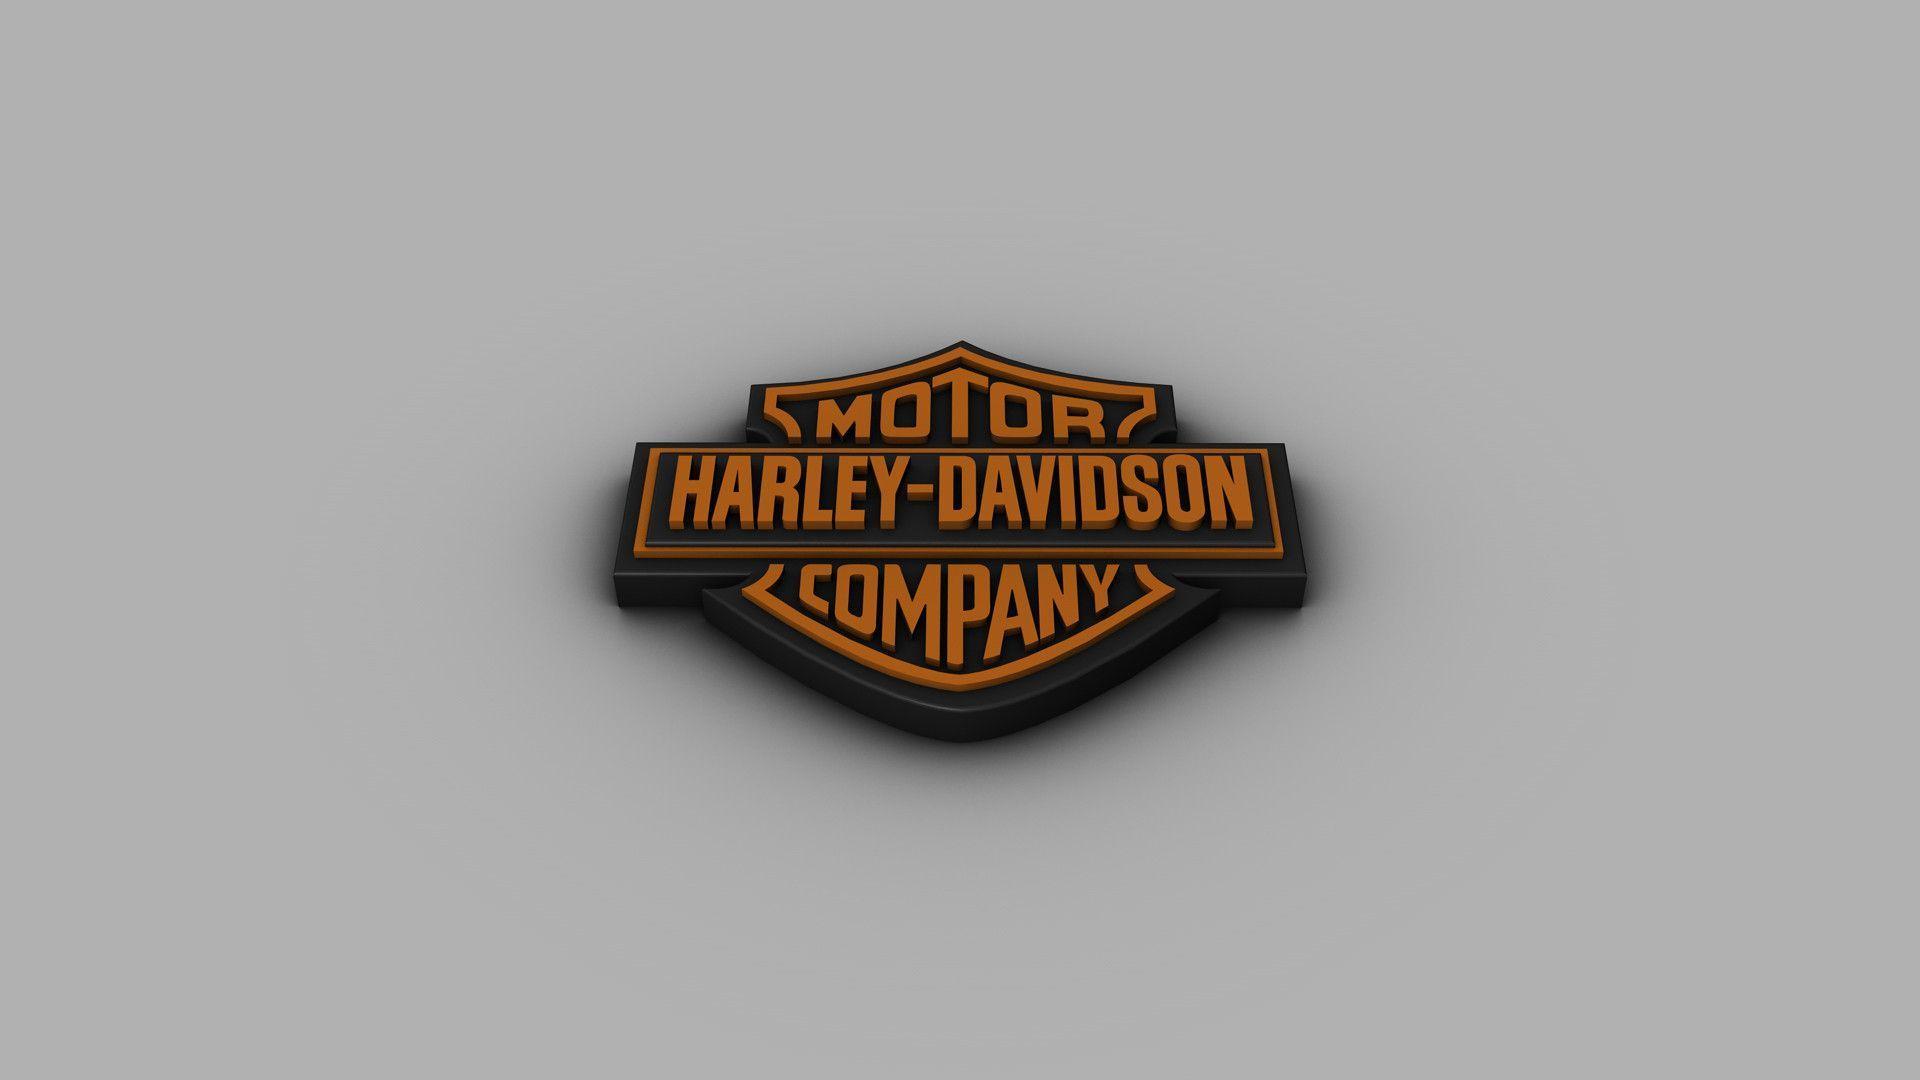 Motor Harley Davidson Company